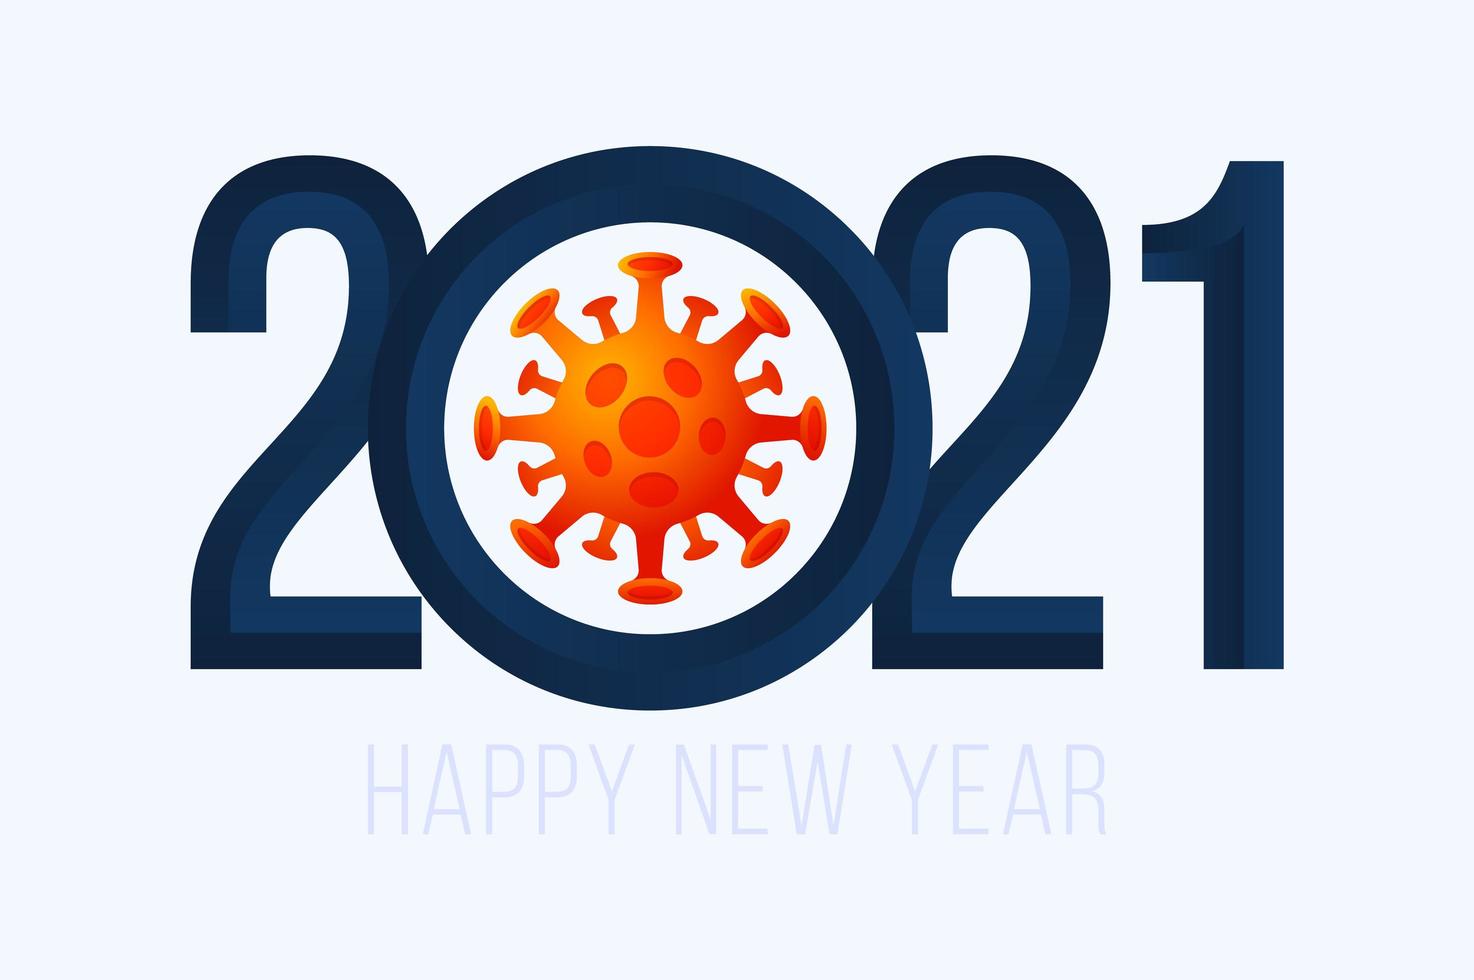 Happy New Year 2021 typography with Coronavirus cell vector